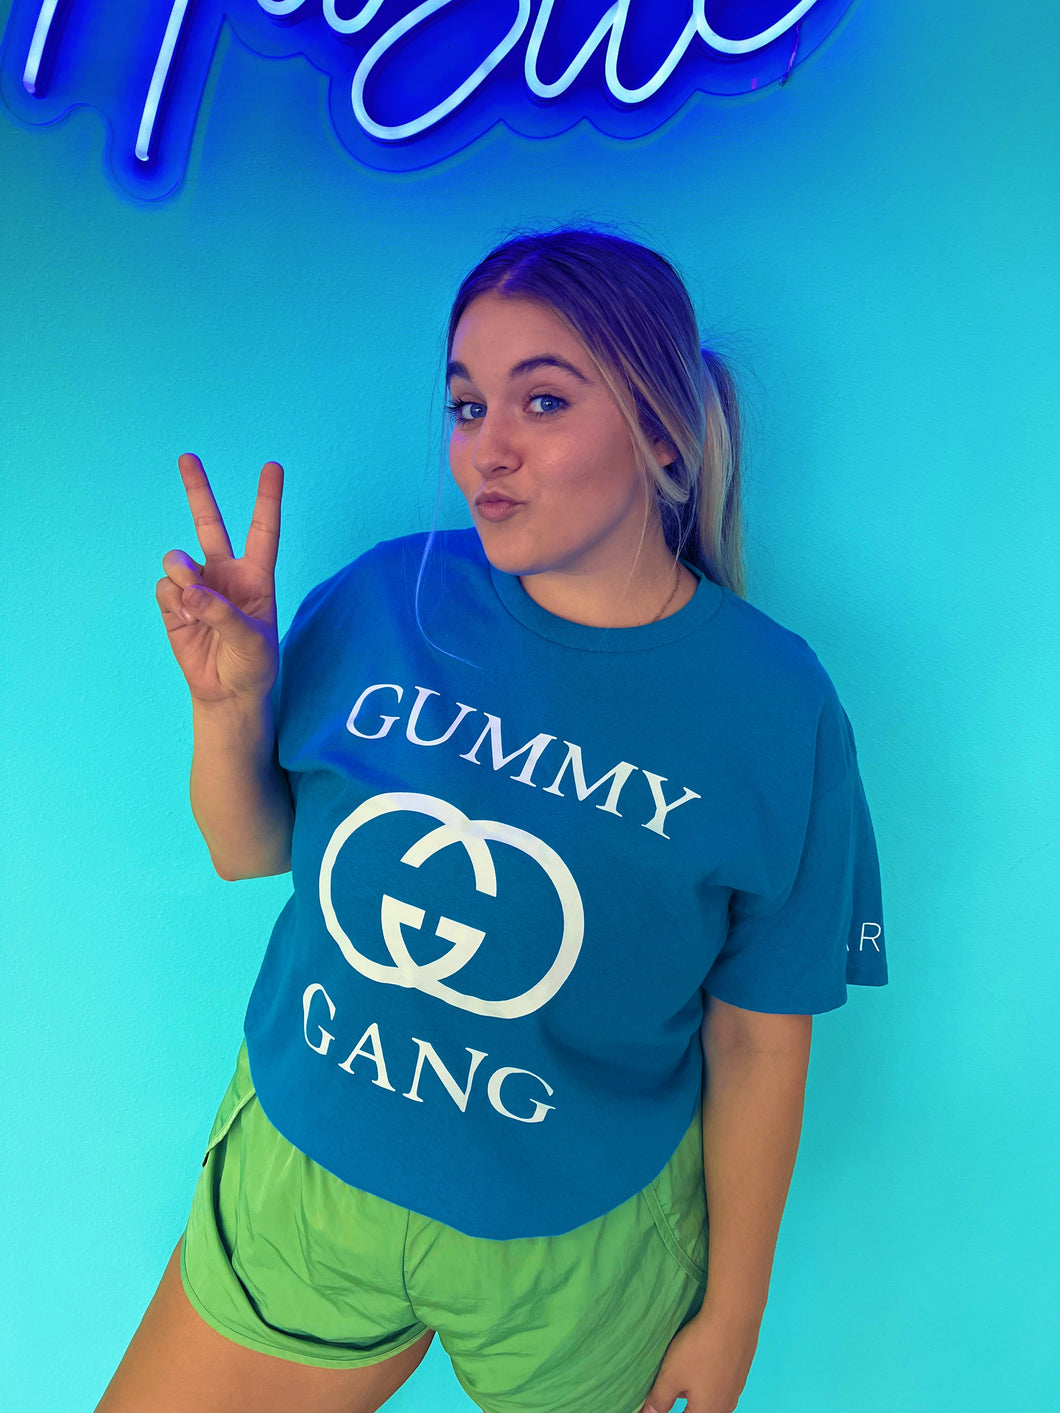 Gummy Gang Blue!